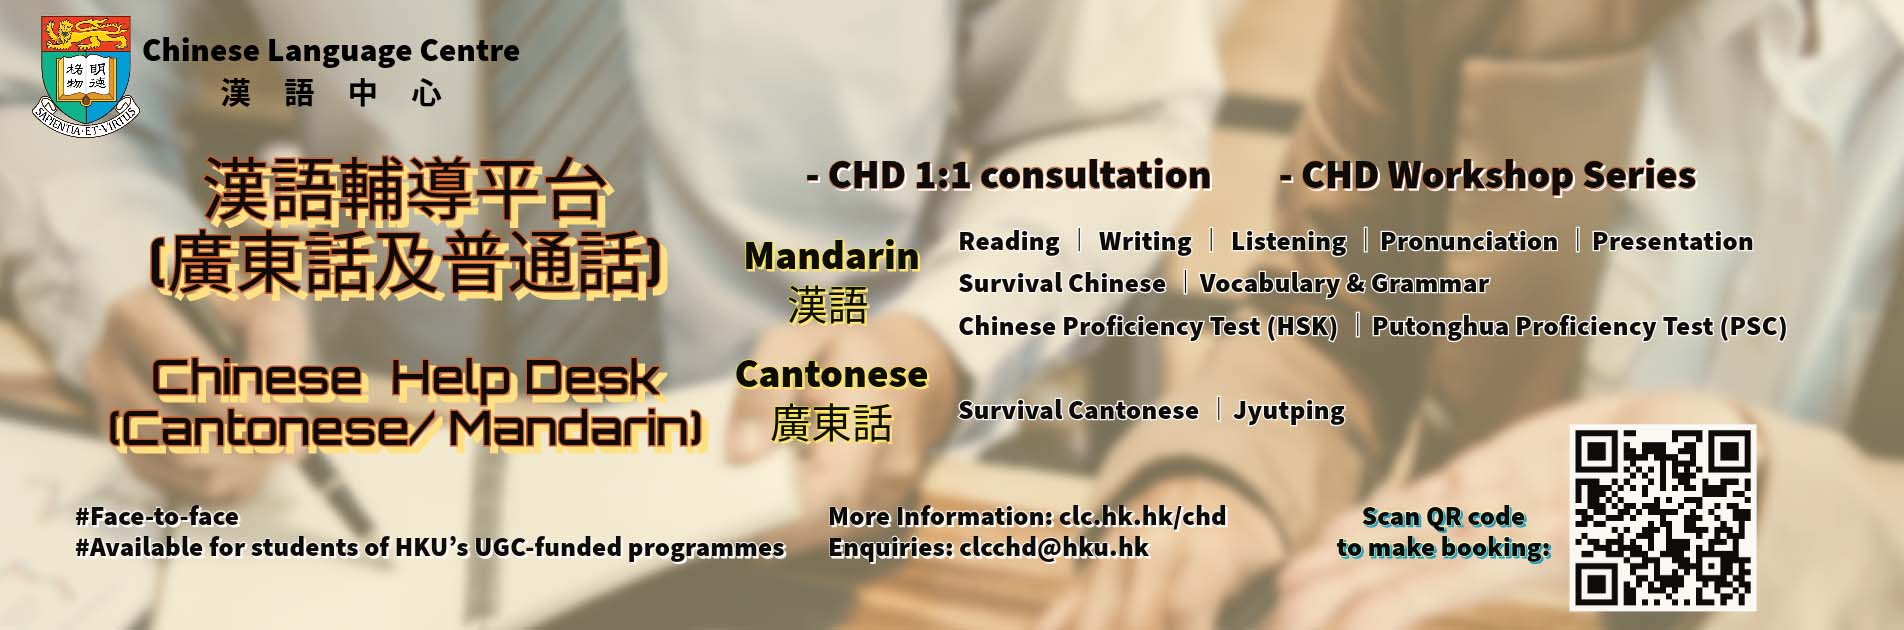 chinese-help-desk-banner-202309191612